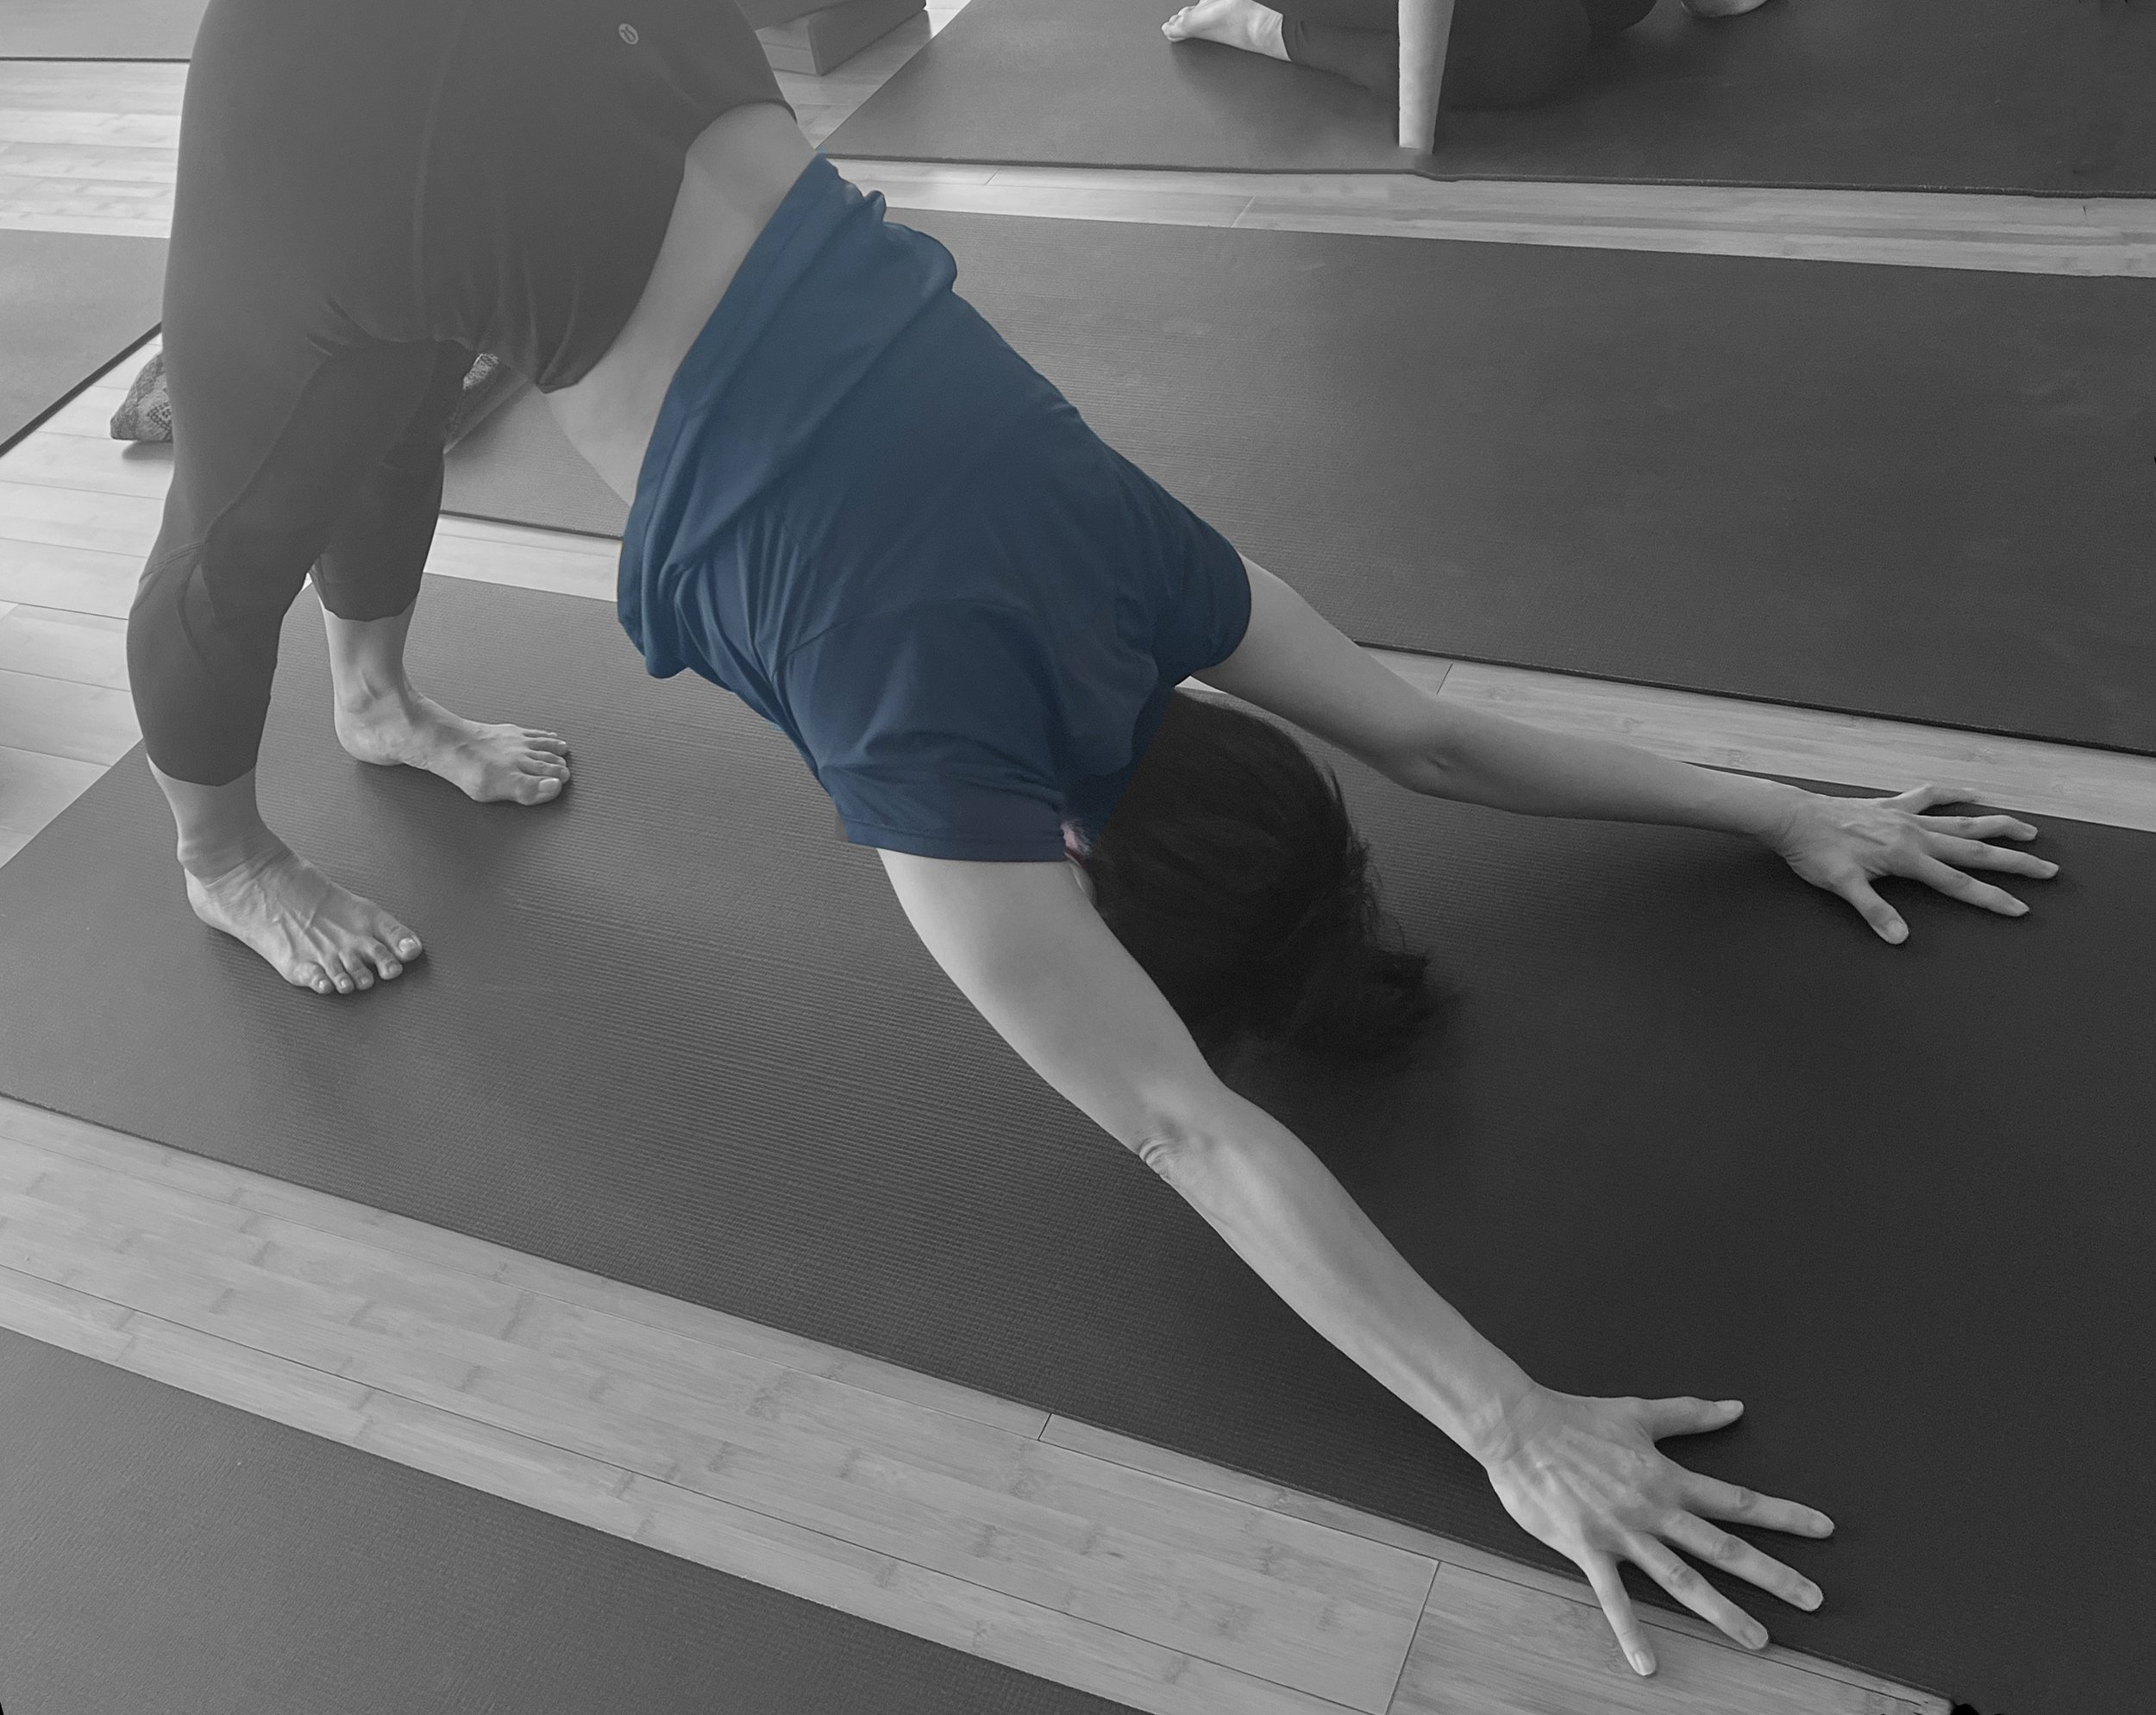 Functional Yang, Yin-Yang & Shoulder Anatomy (Module 3) — Yintelligence  School of Yin & Functional Yoga